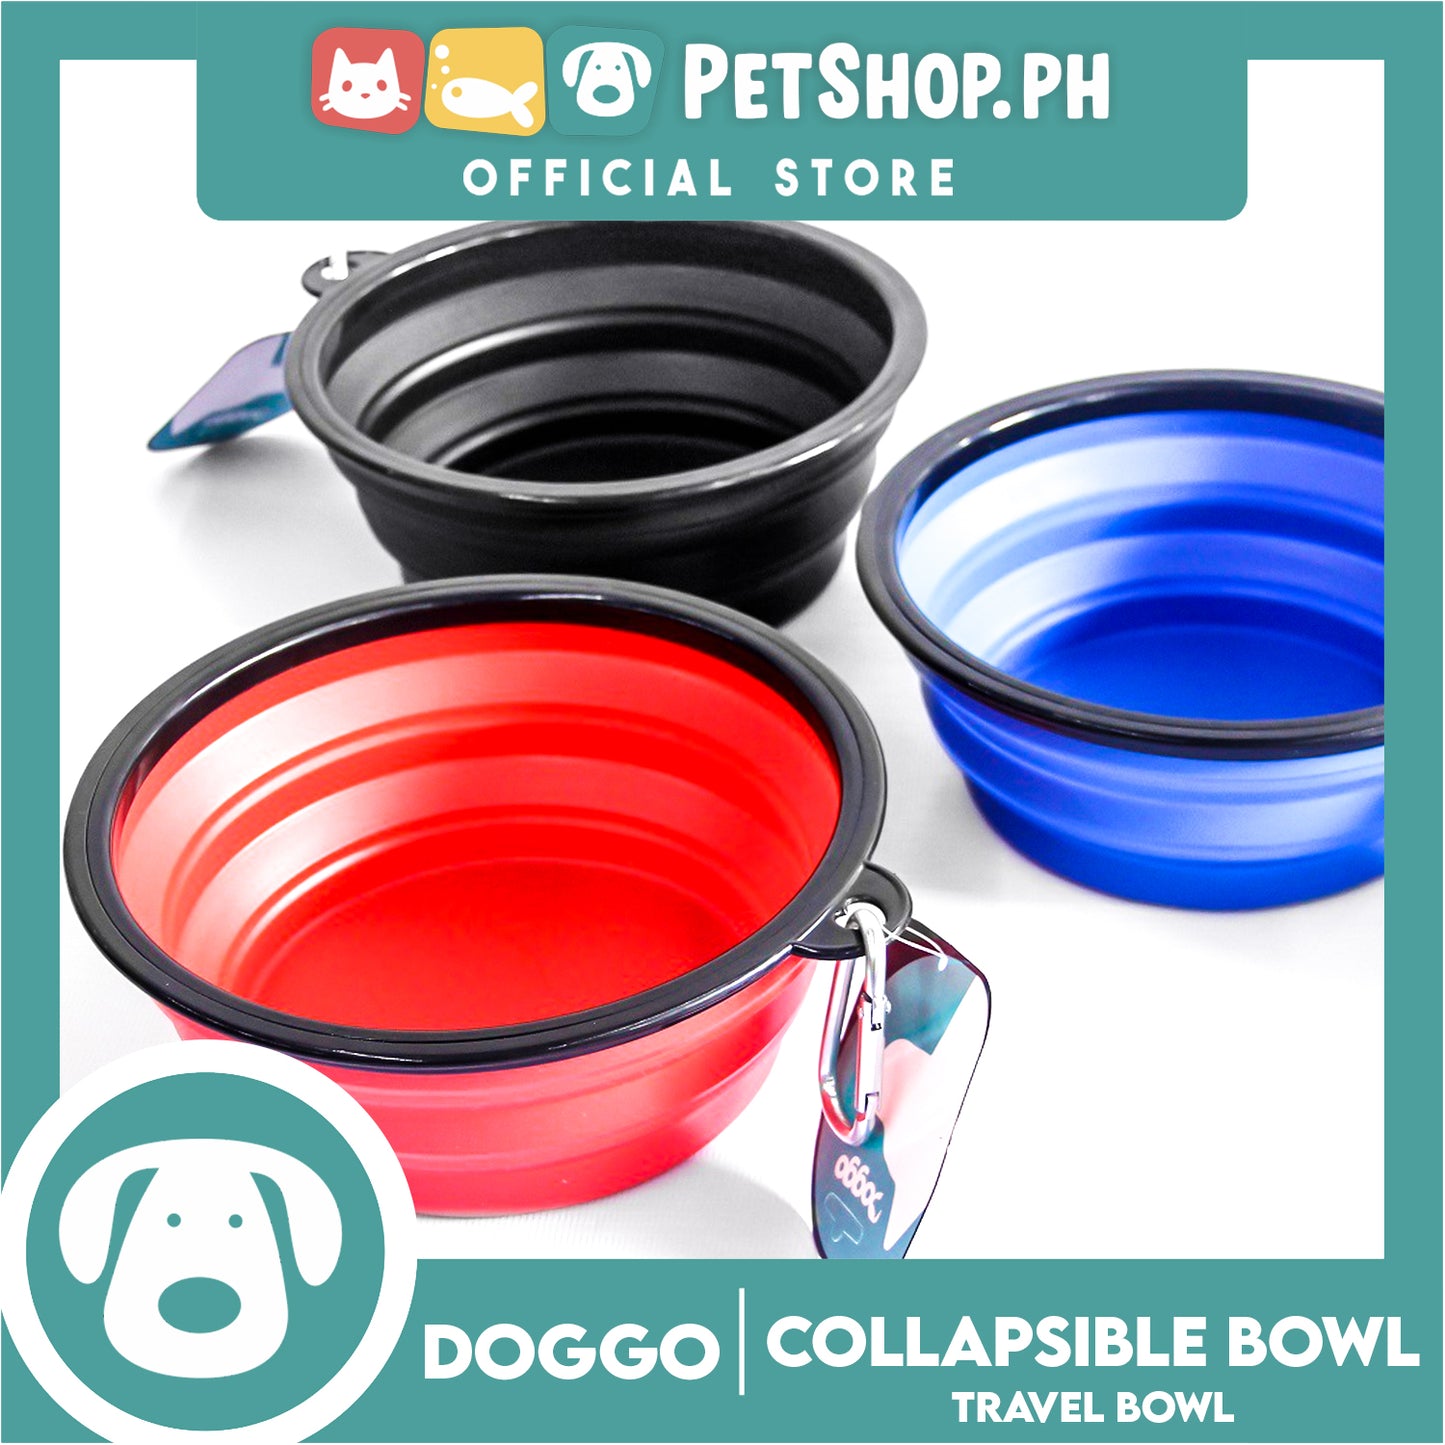 Doggo Collapsible Travel Bowl Large Size (Red) Foldable Pet Feeding Bowl